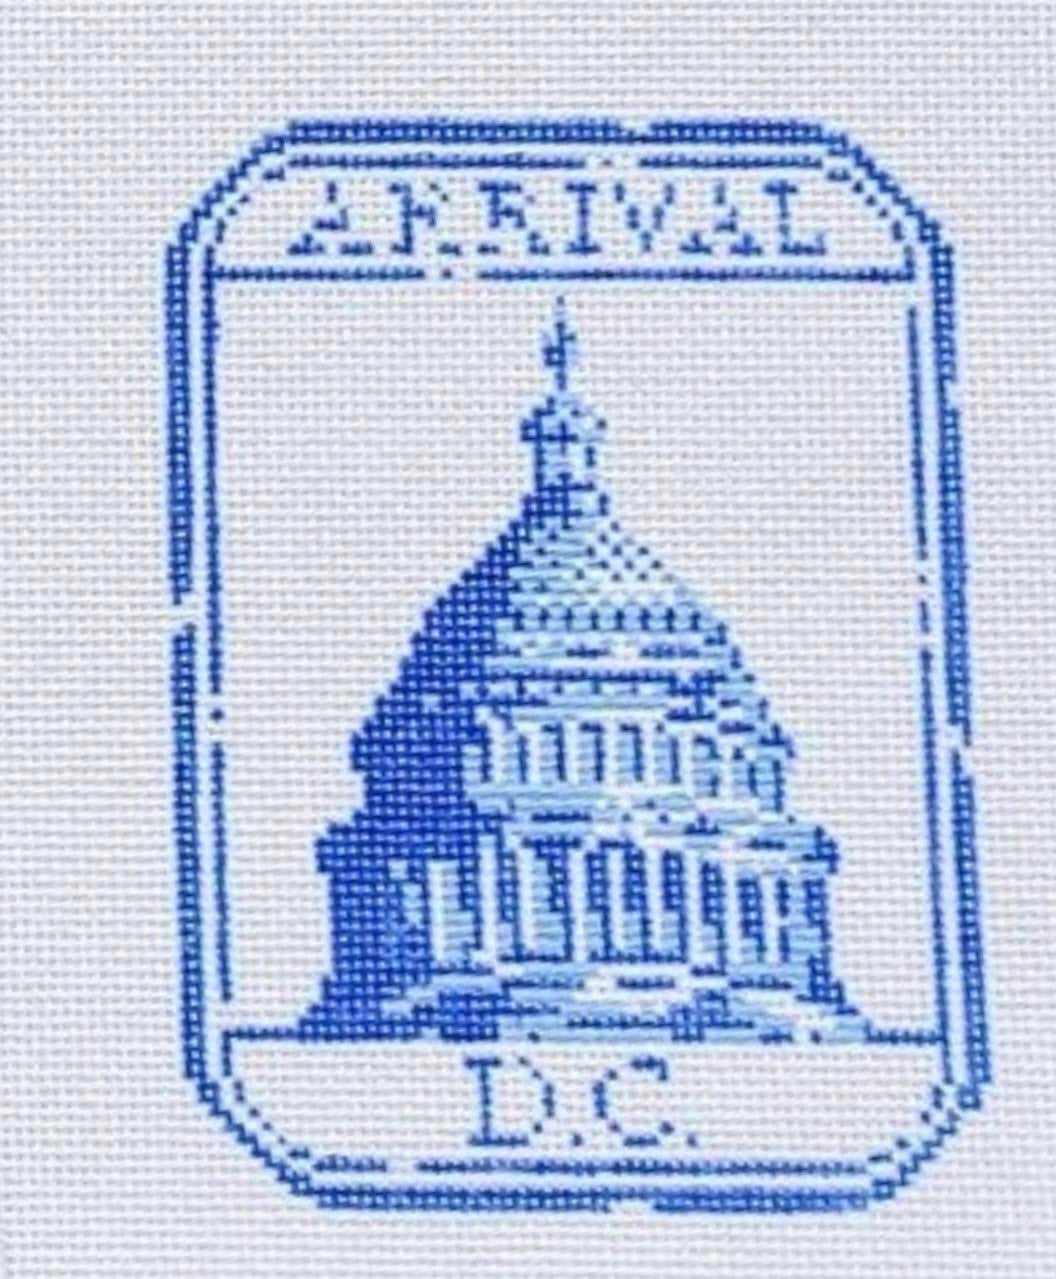 Audrey Wu Passport Stamp - D.C.